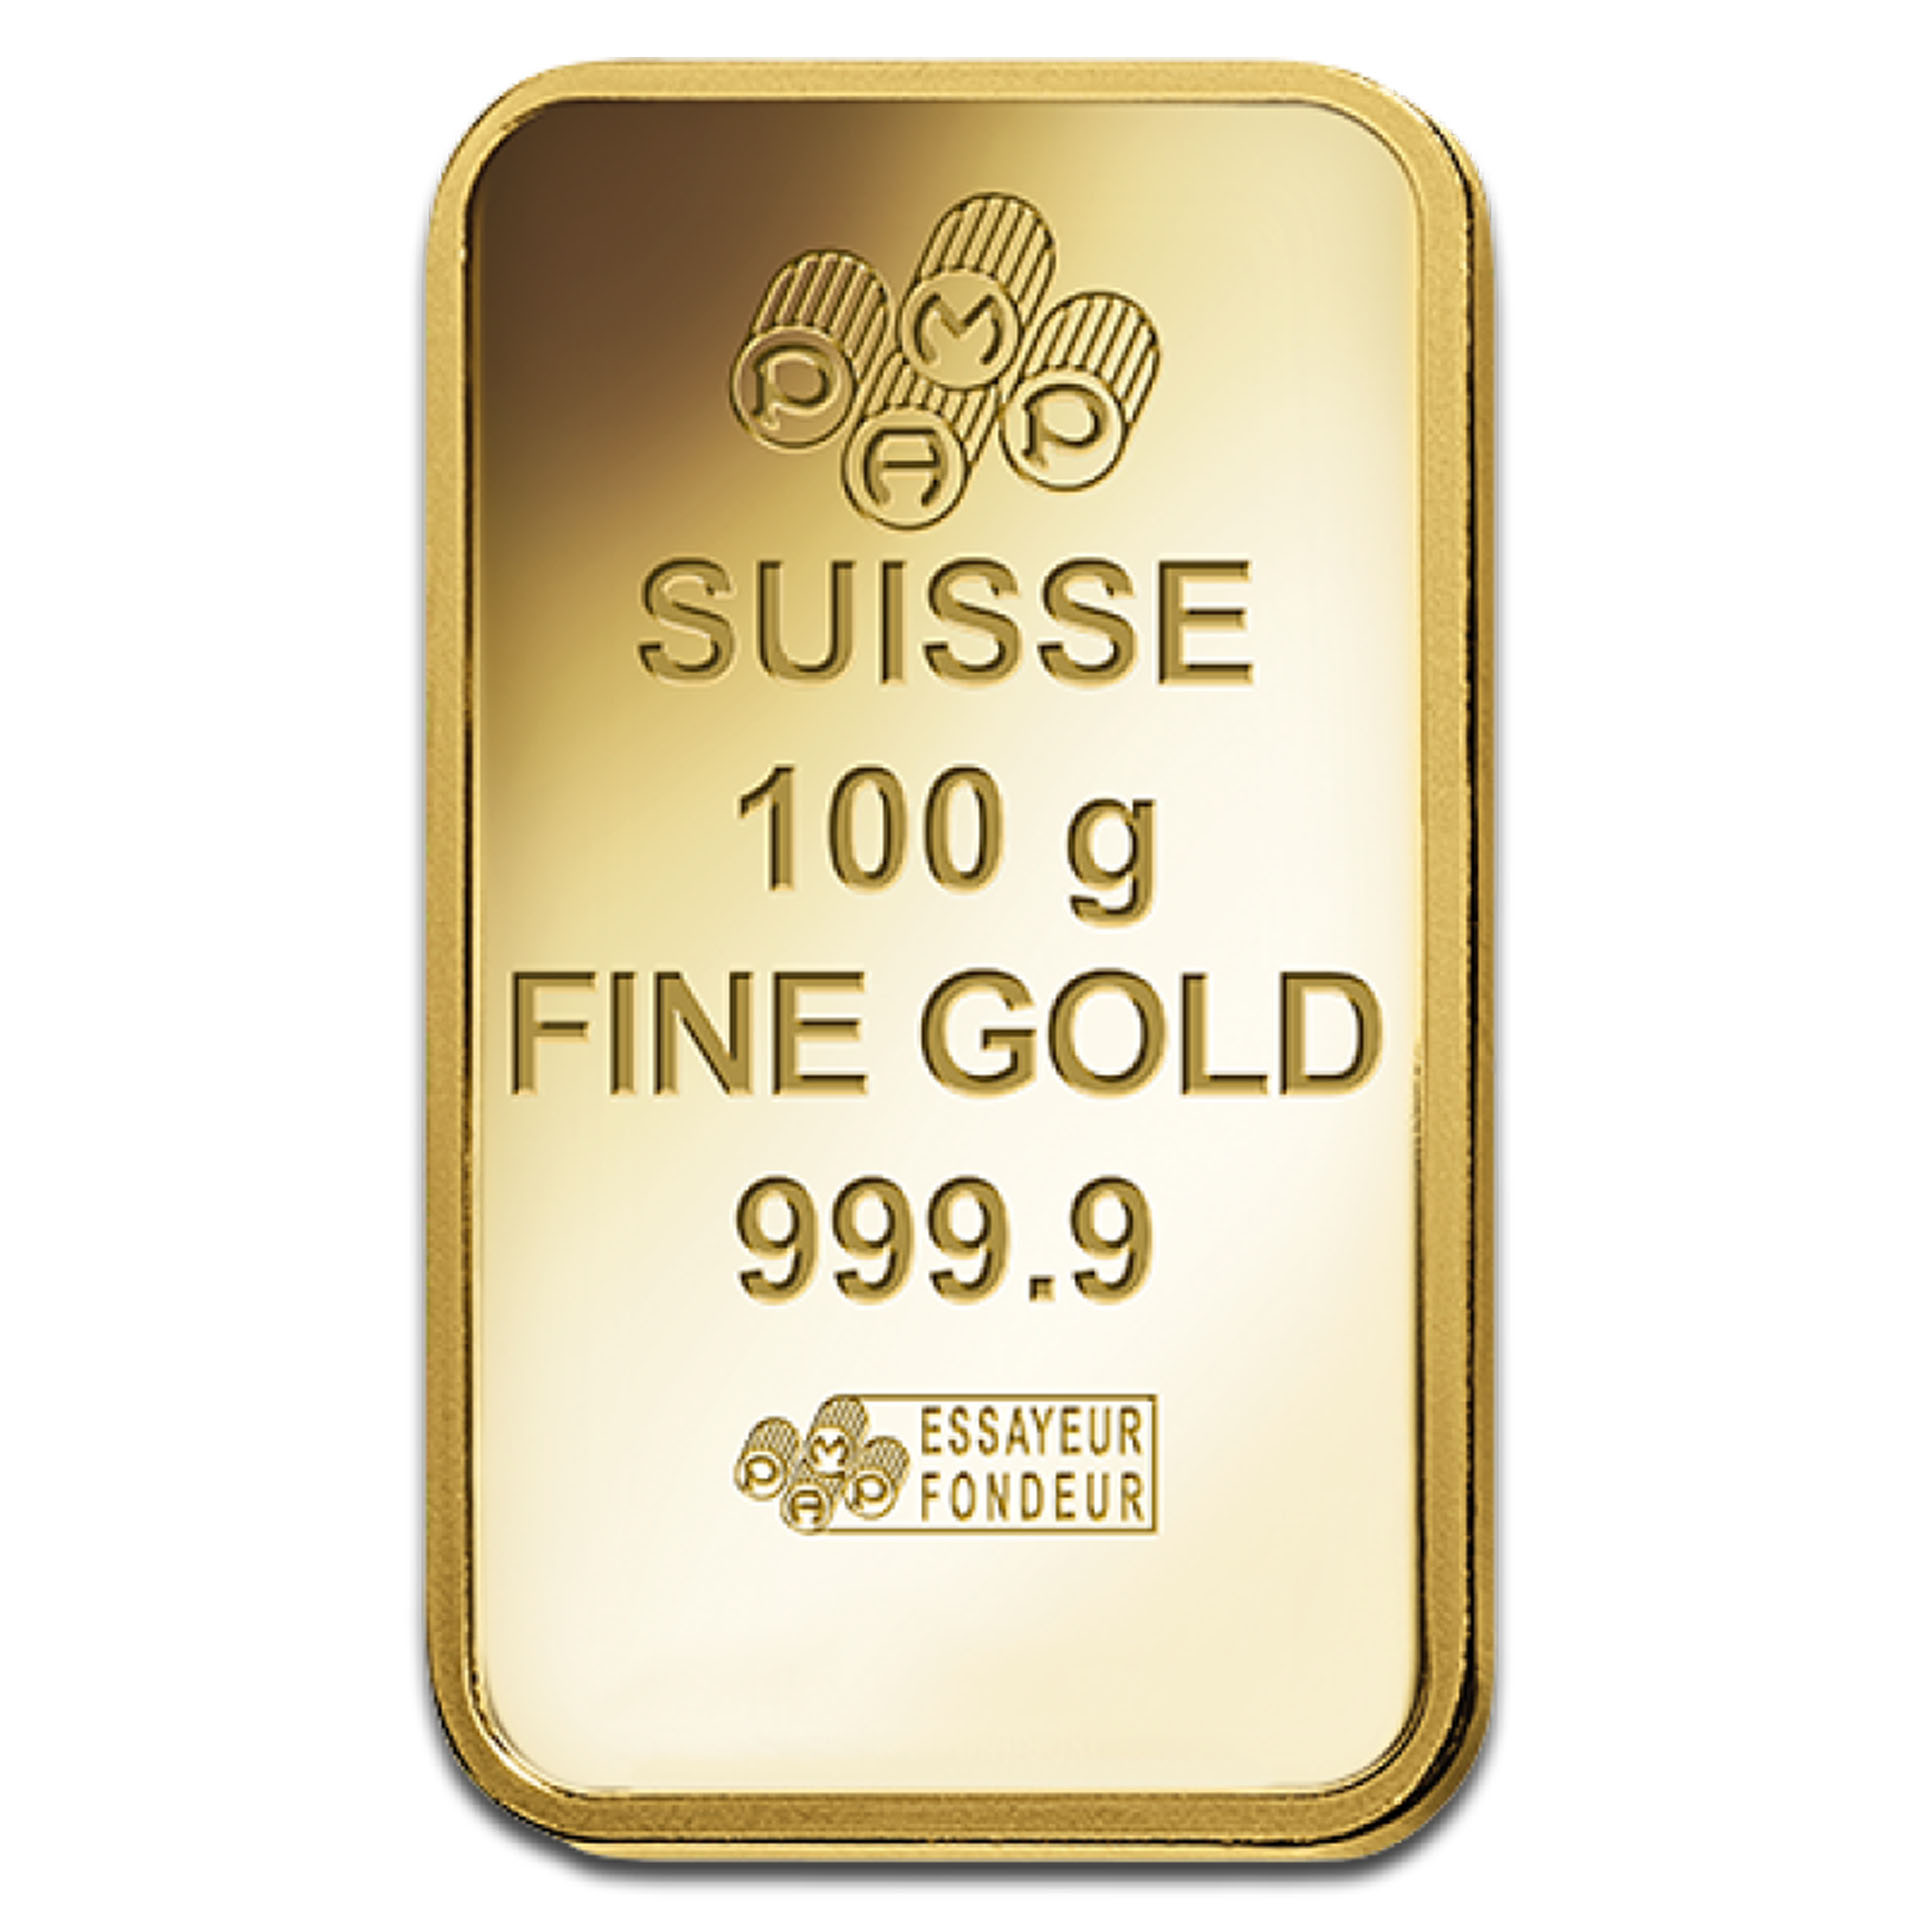 Чистое золото 999. Suisse 10g Fine Silver 999.9 белое золото. Suisse 10g Fine Gold 999.9 кулон. Слиток золота 999. 999.9 Fine Gold кулон серебро.